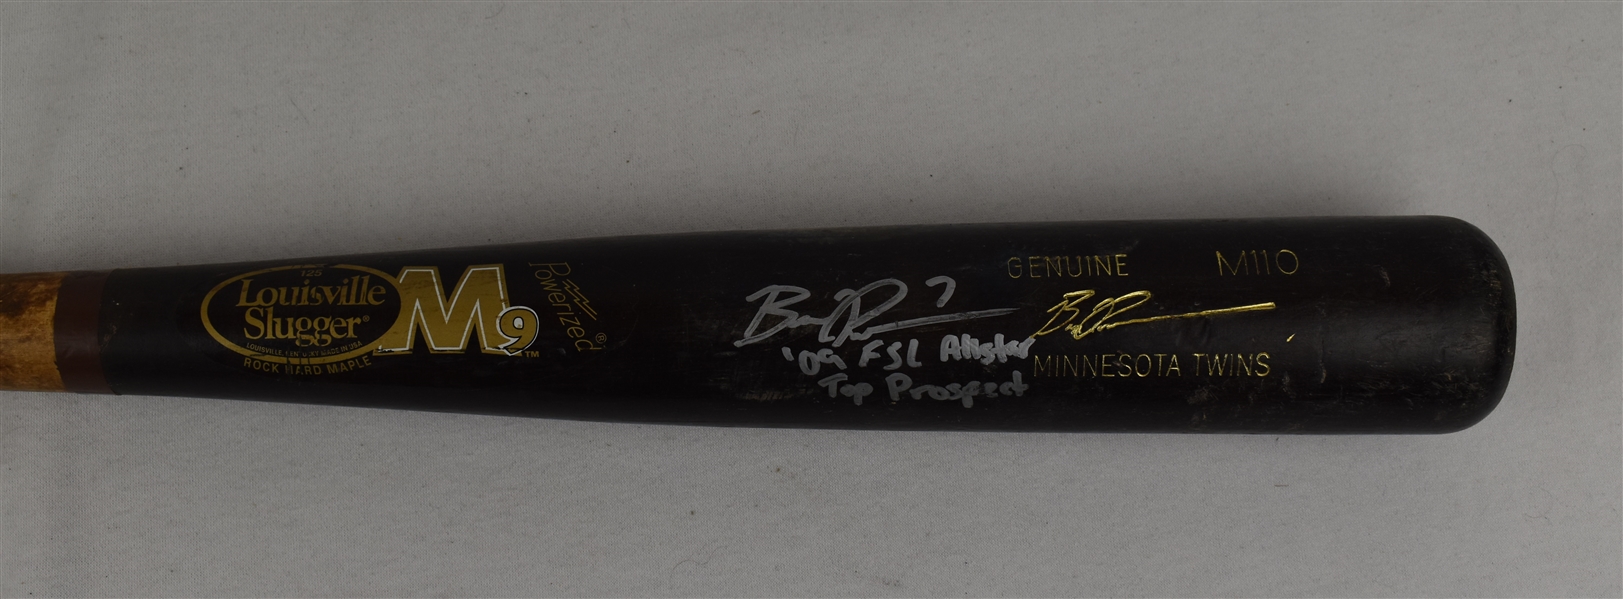 Ben Revere 2010 Minnesota Twins Game Used Autographed Bat